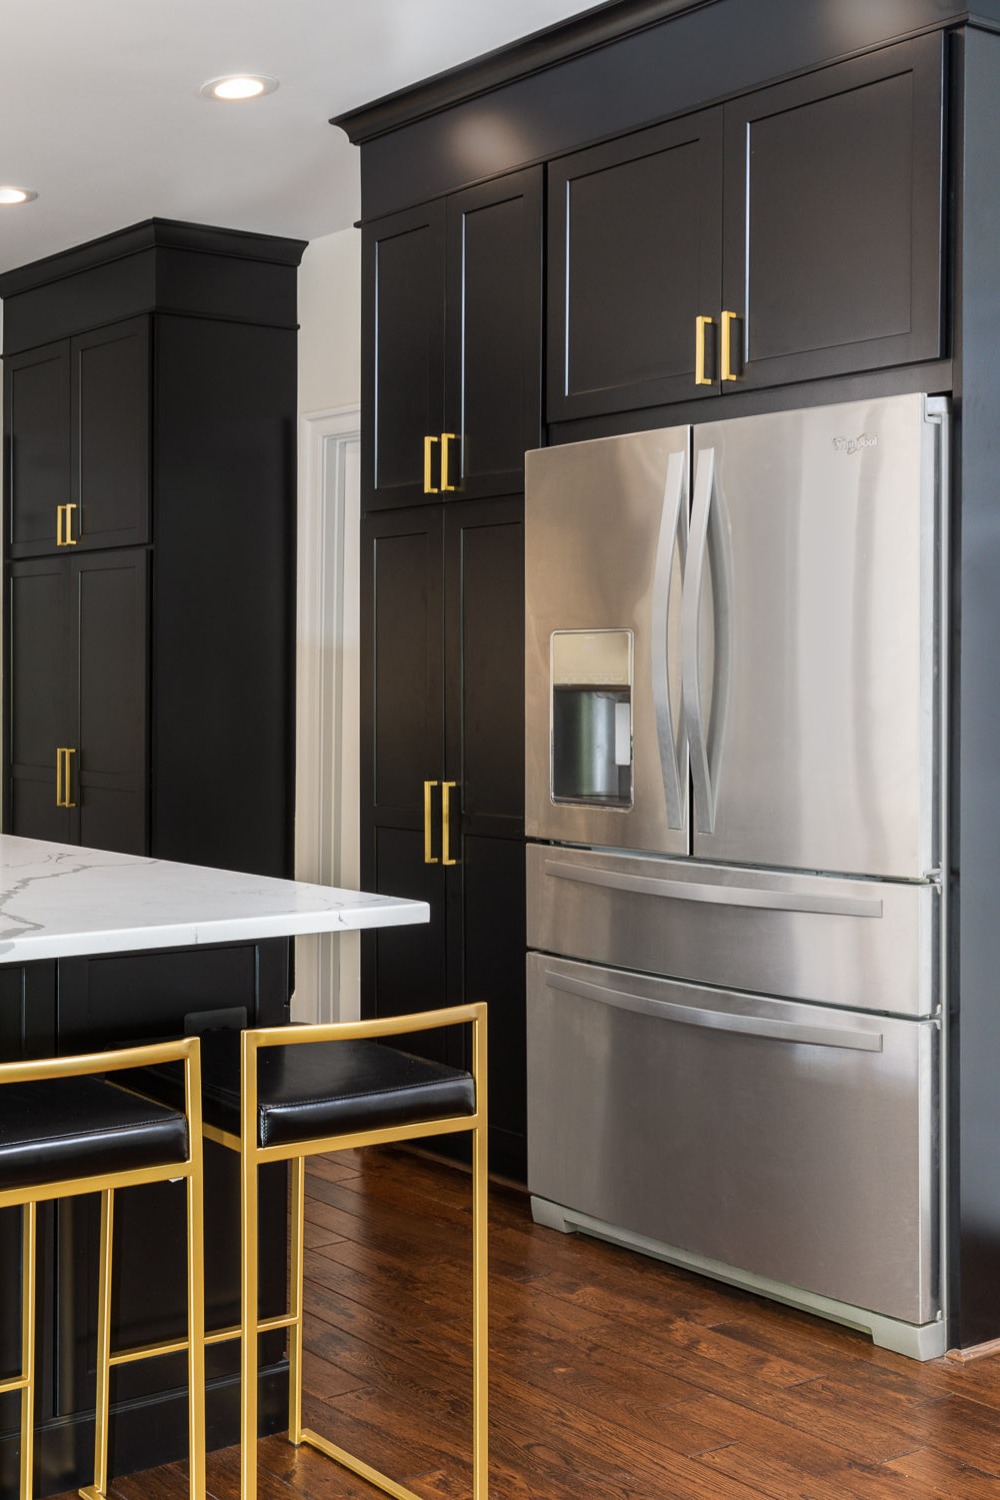 Brass Pulls Knobs Gold Hardware Bar Room Dark Metal Kitchen Cabinets Color Scheme Space Modern Wall Classic